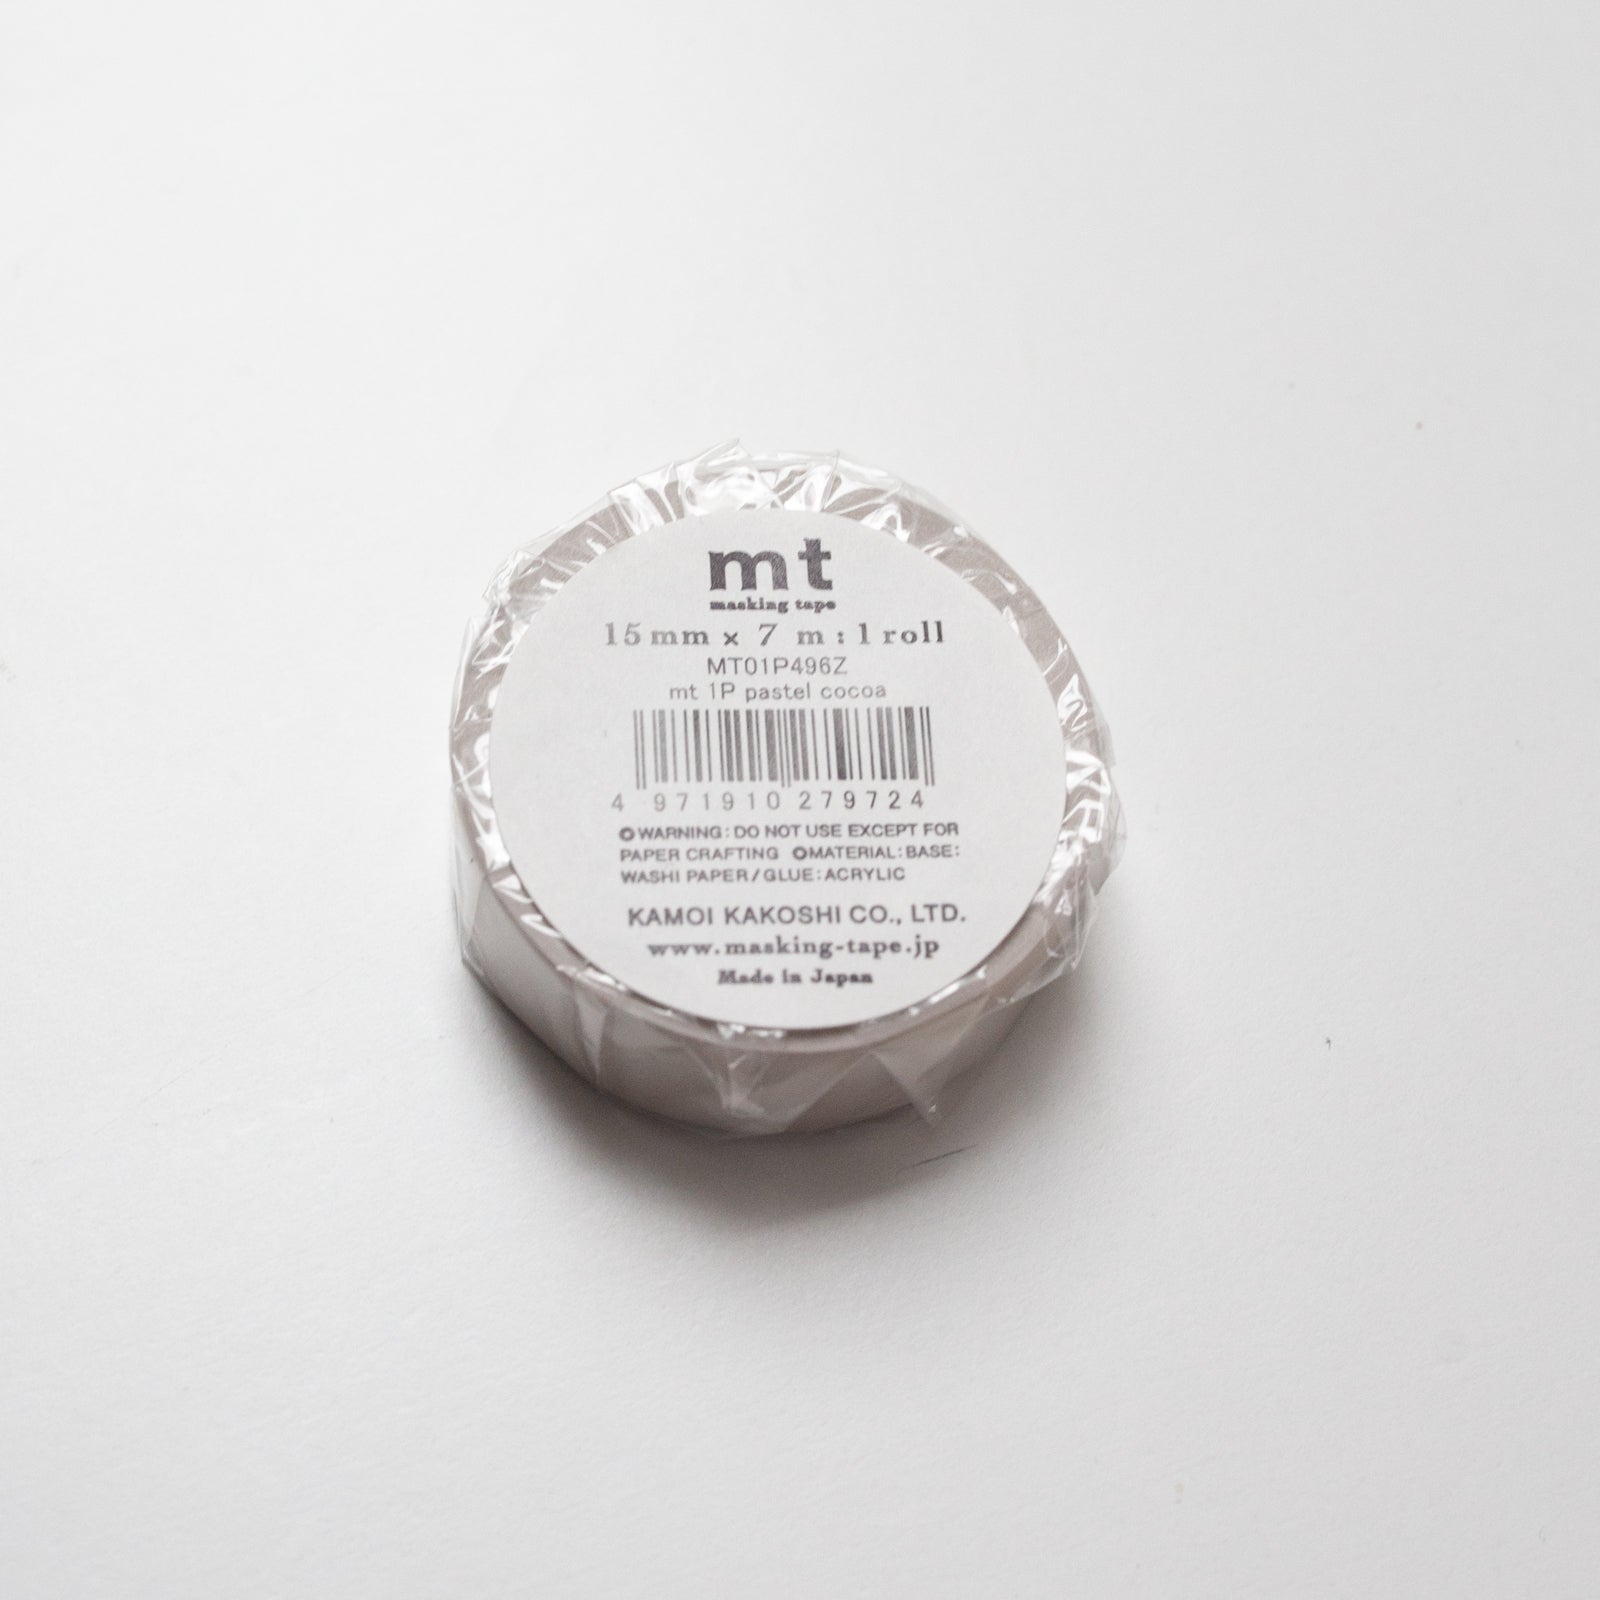 MT Masking tape Pastel Cocoa